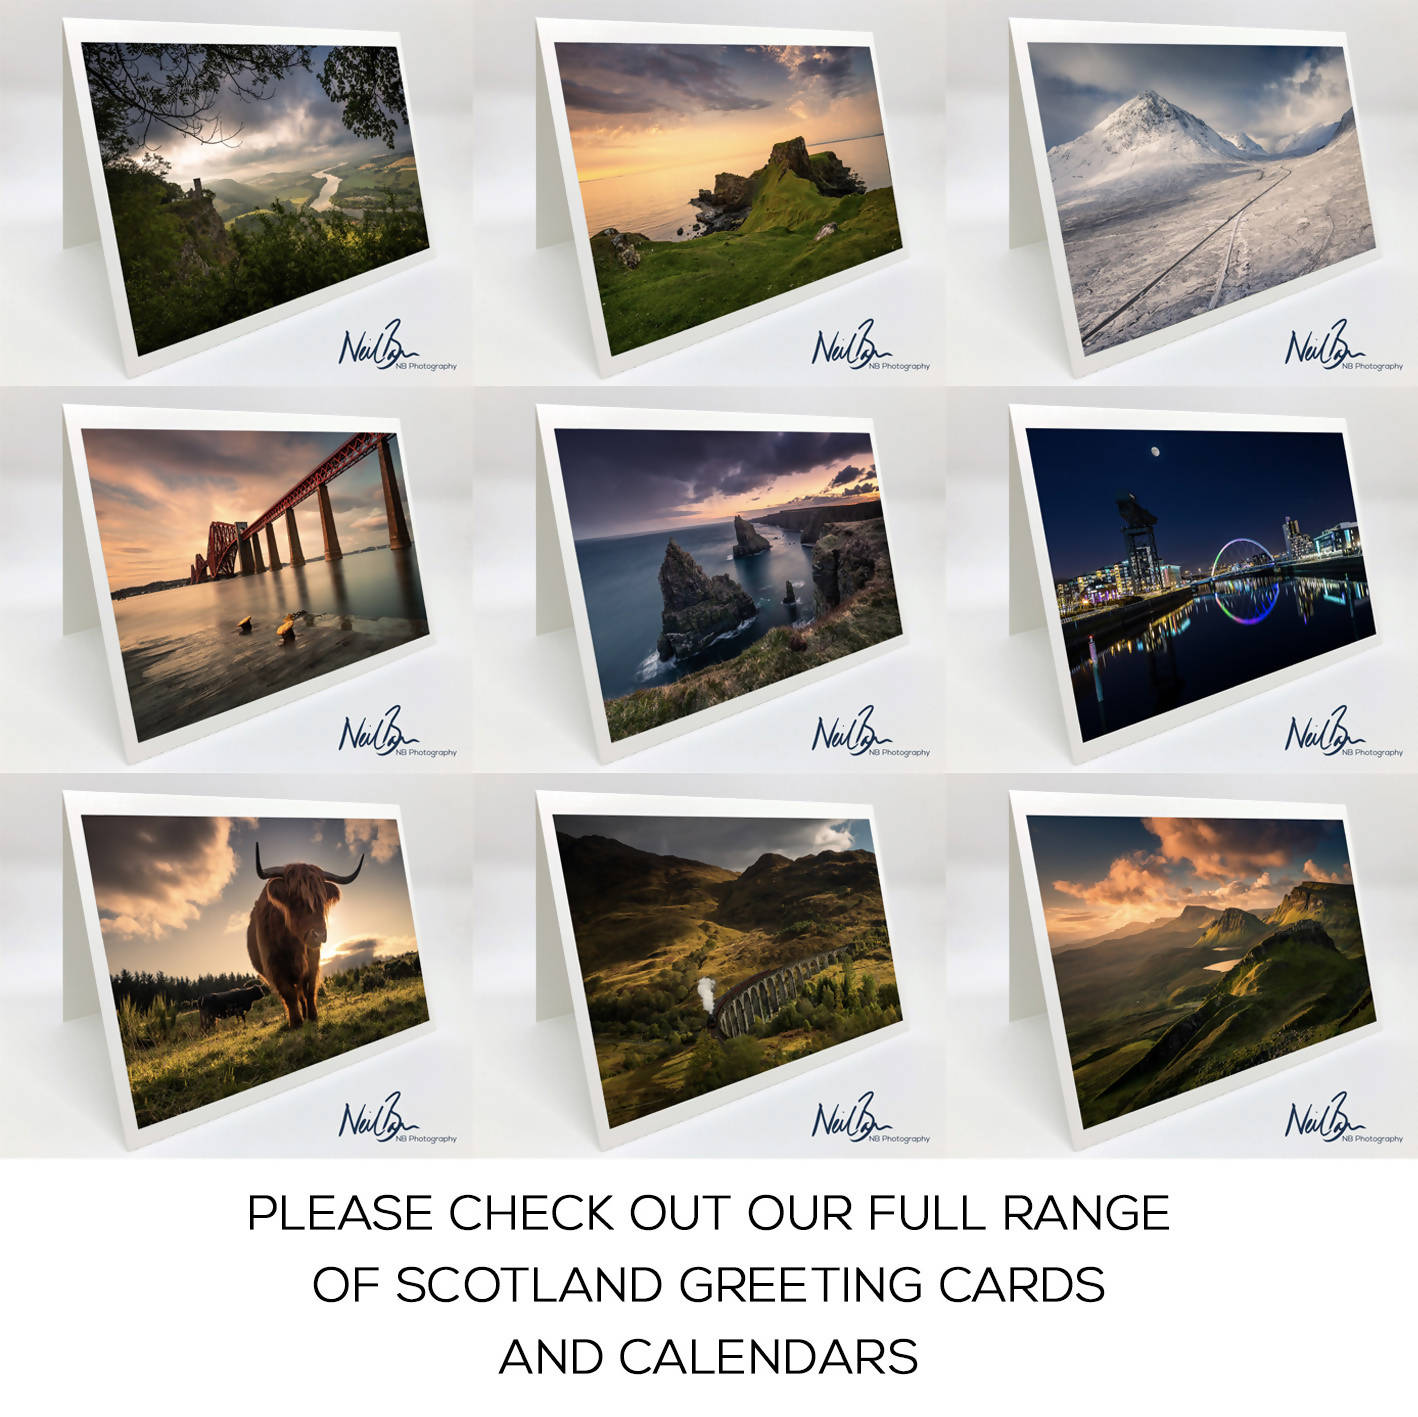 Highland Coo, Gleniffer Braes - Scotland Greeting Card - Blank Inside